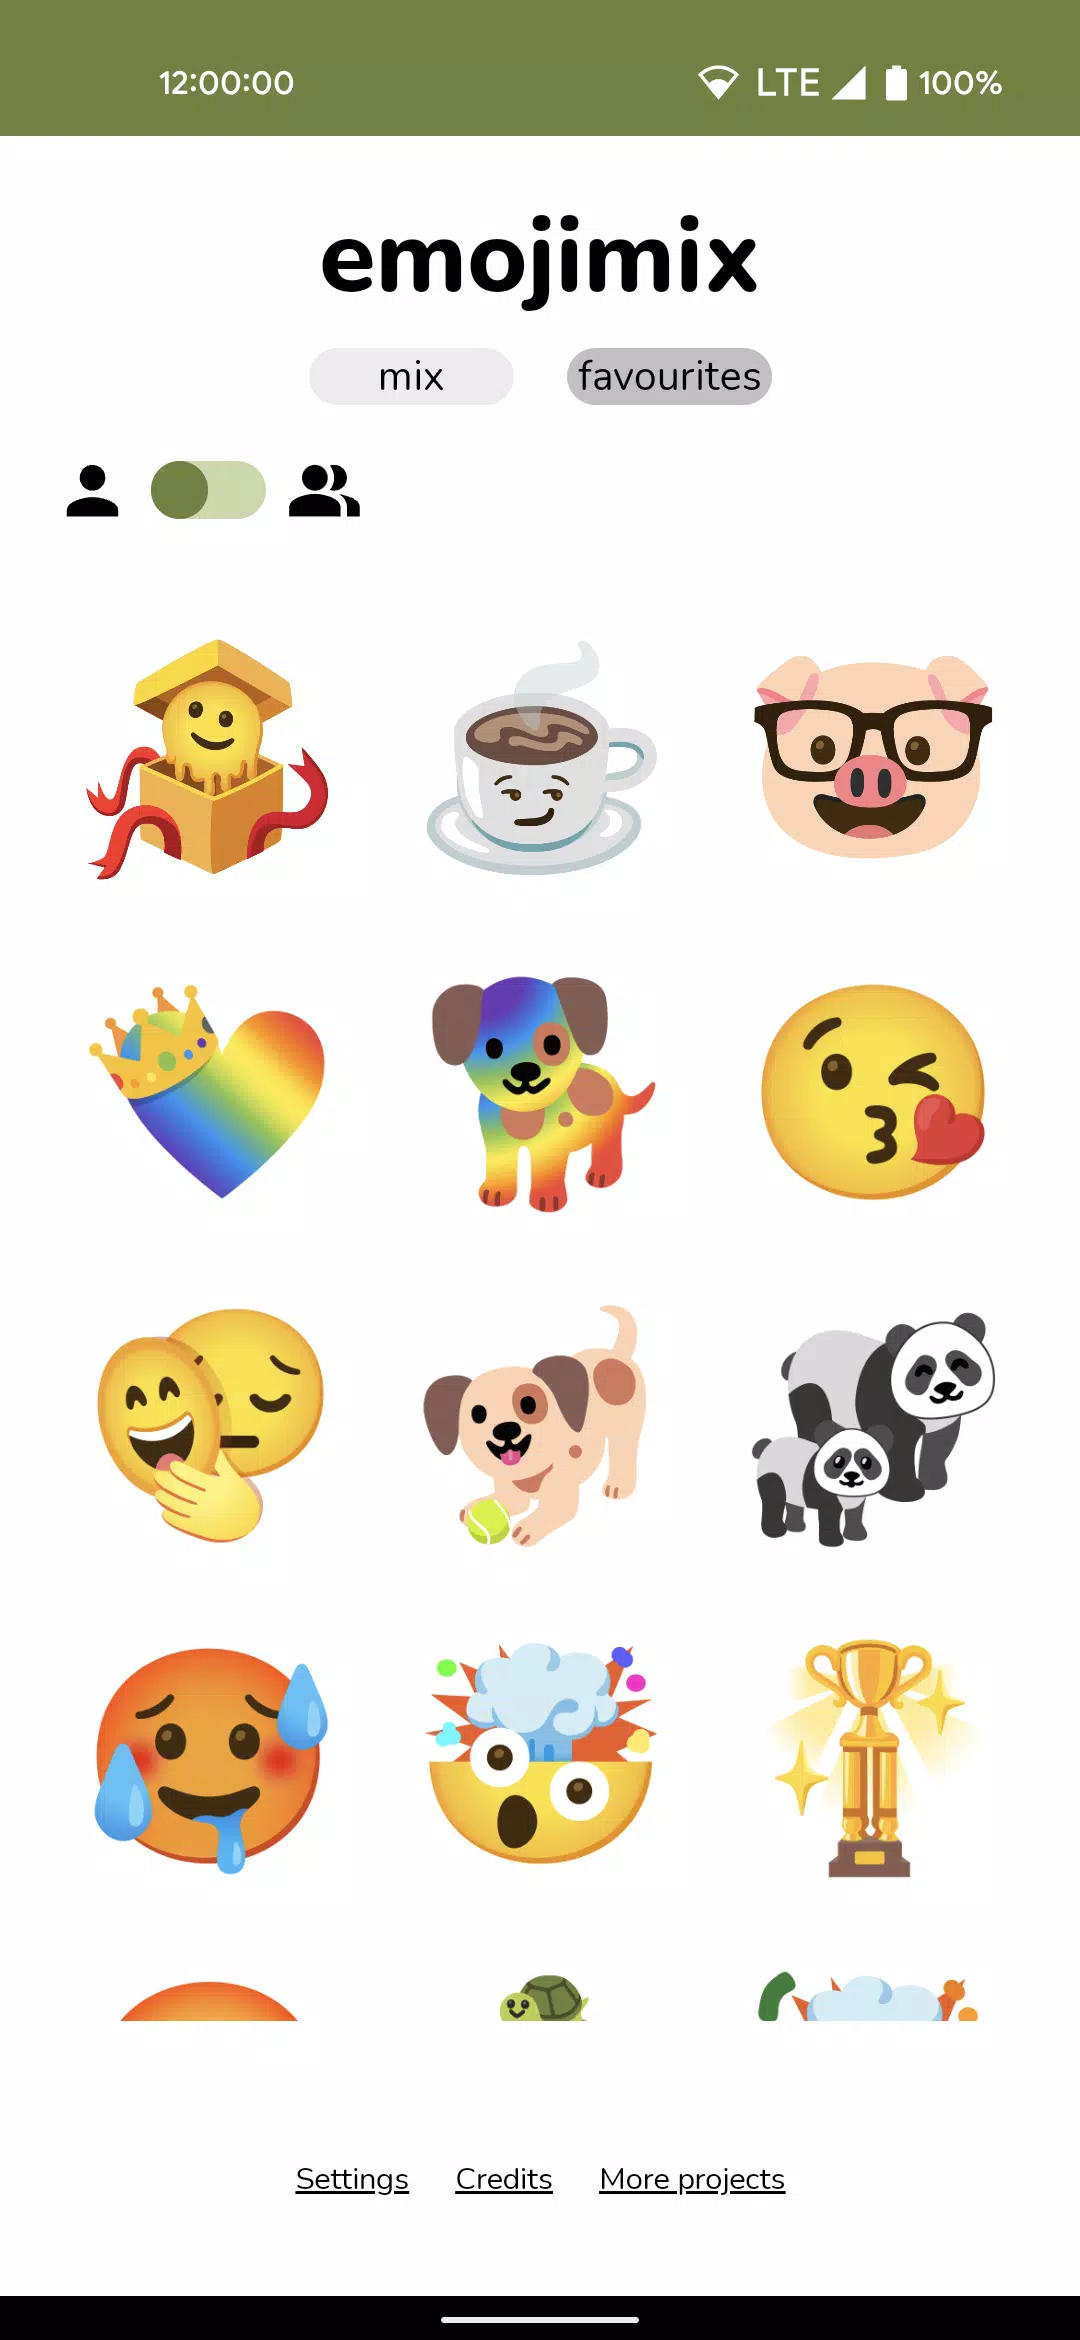 Tải Xuống Apk Emojimix Cho Android